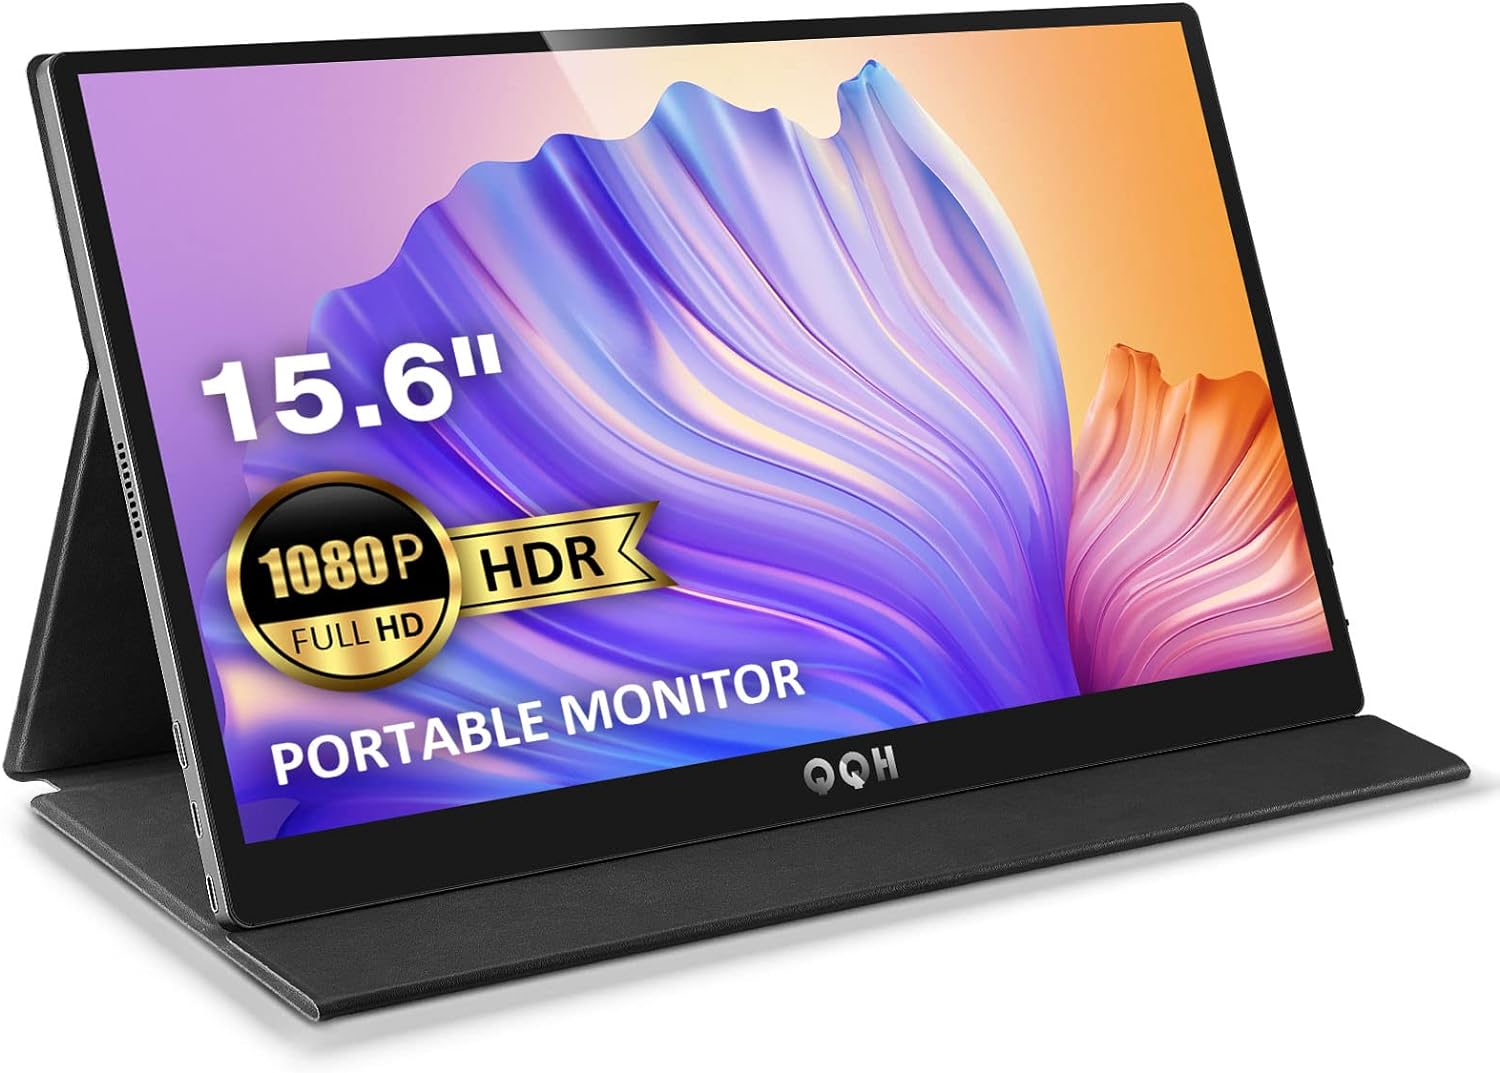 QQH Portable Monitor, 15.6", FHD 1080P USB C Computer Display IPS Second Screen - $60